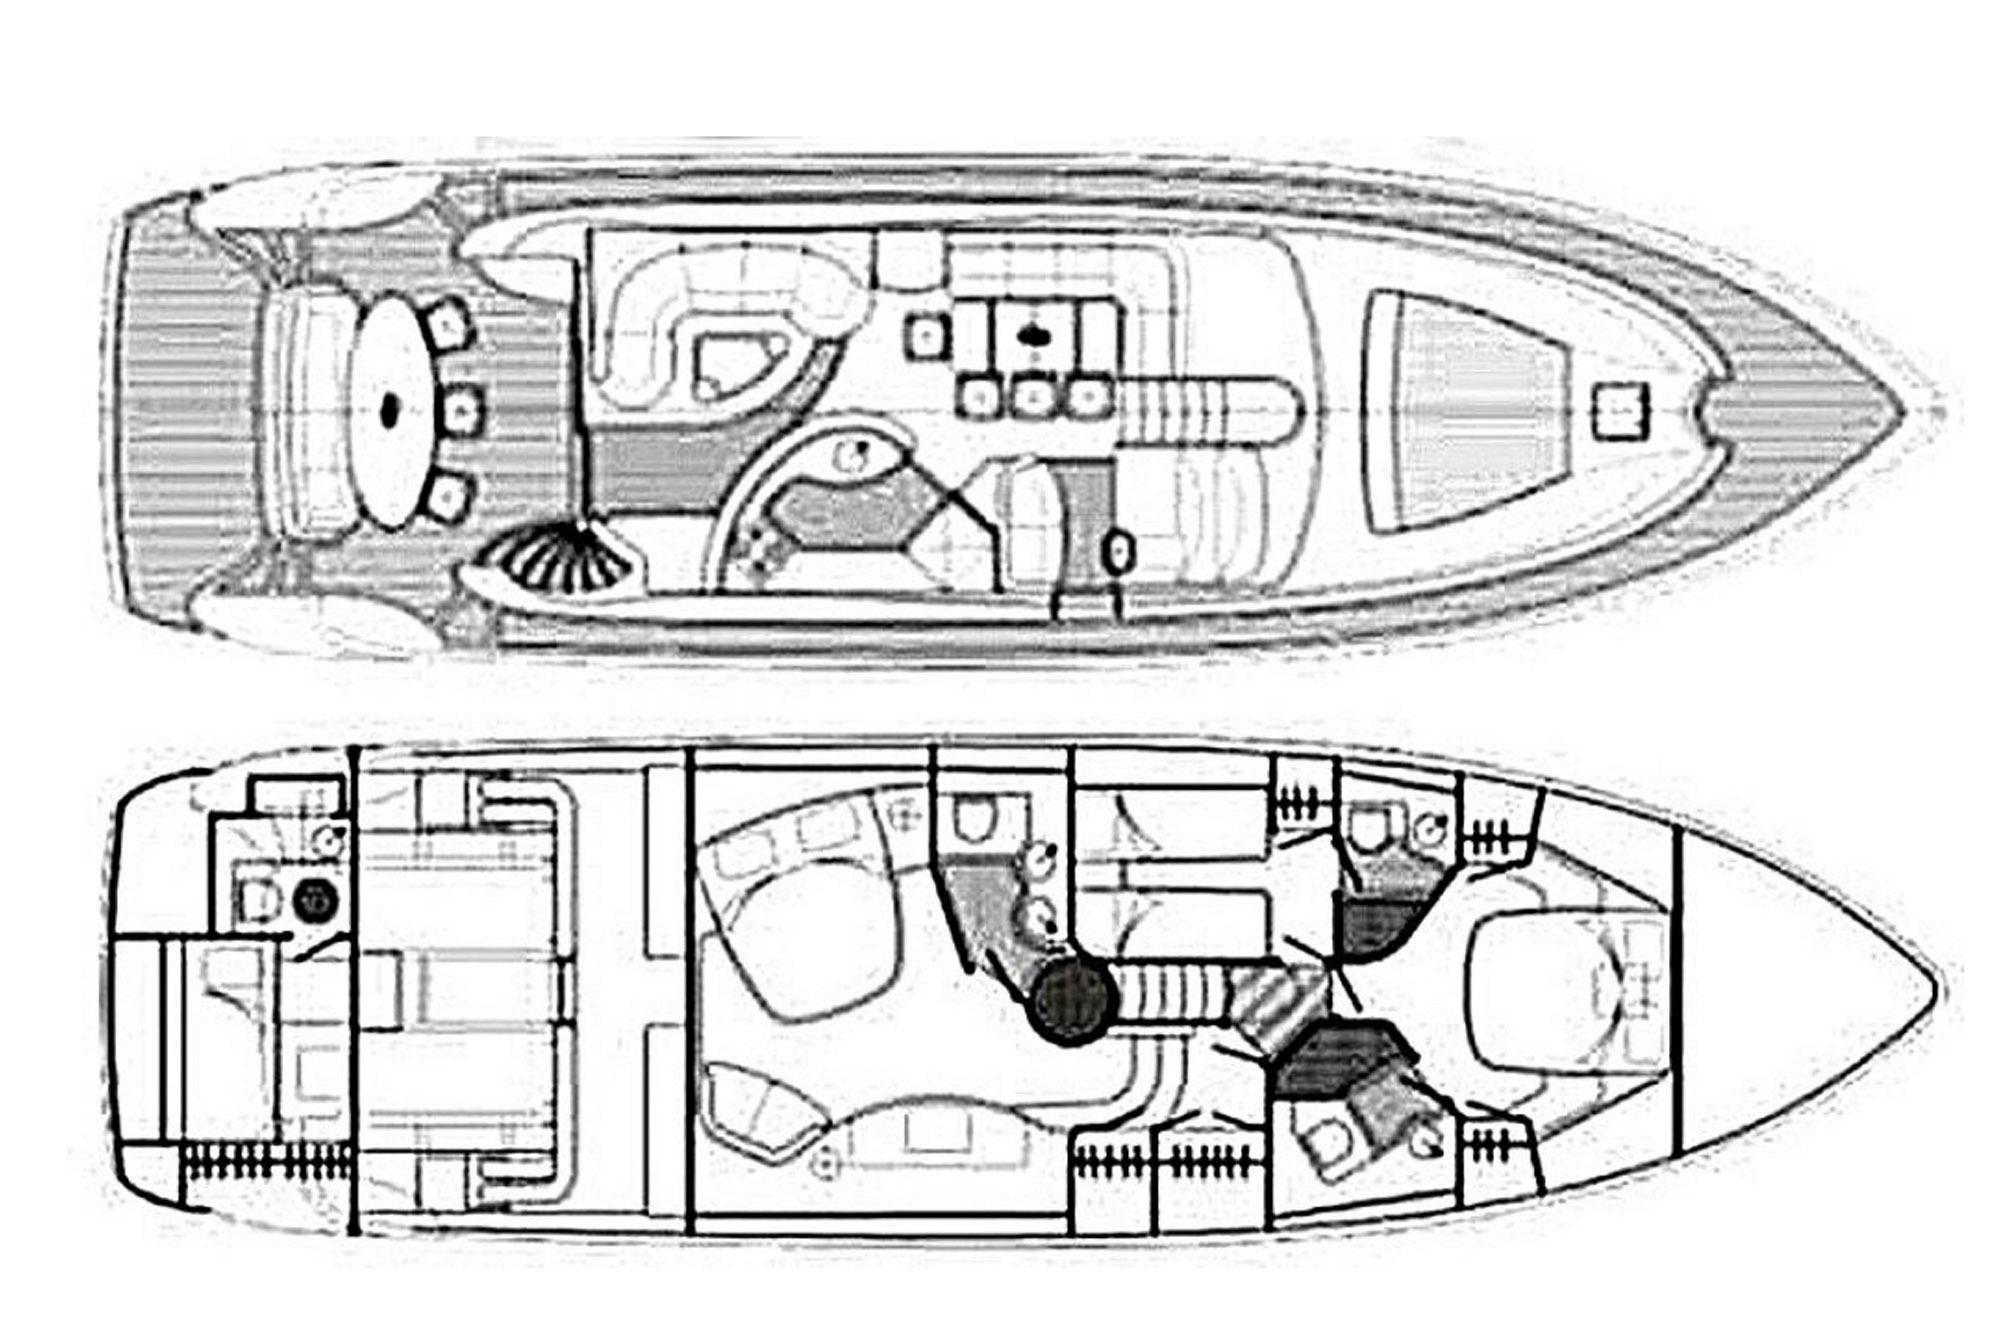 2024 Cayman Yachts 62